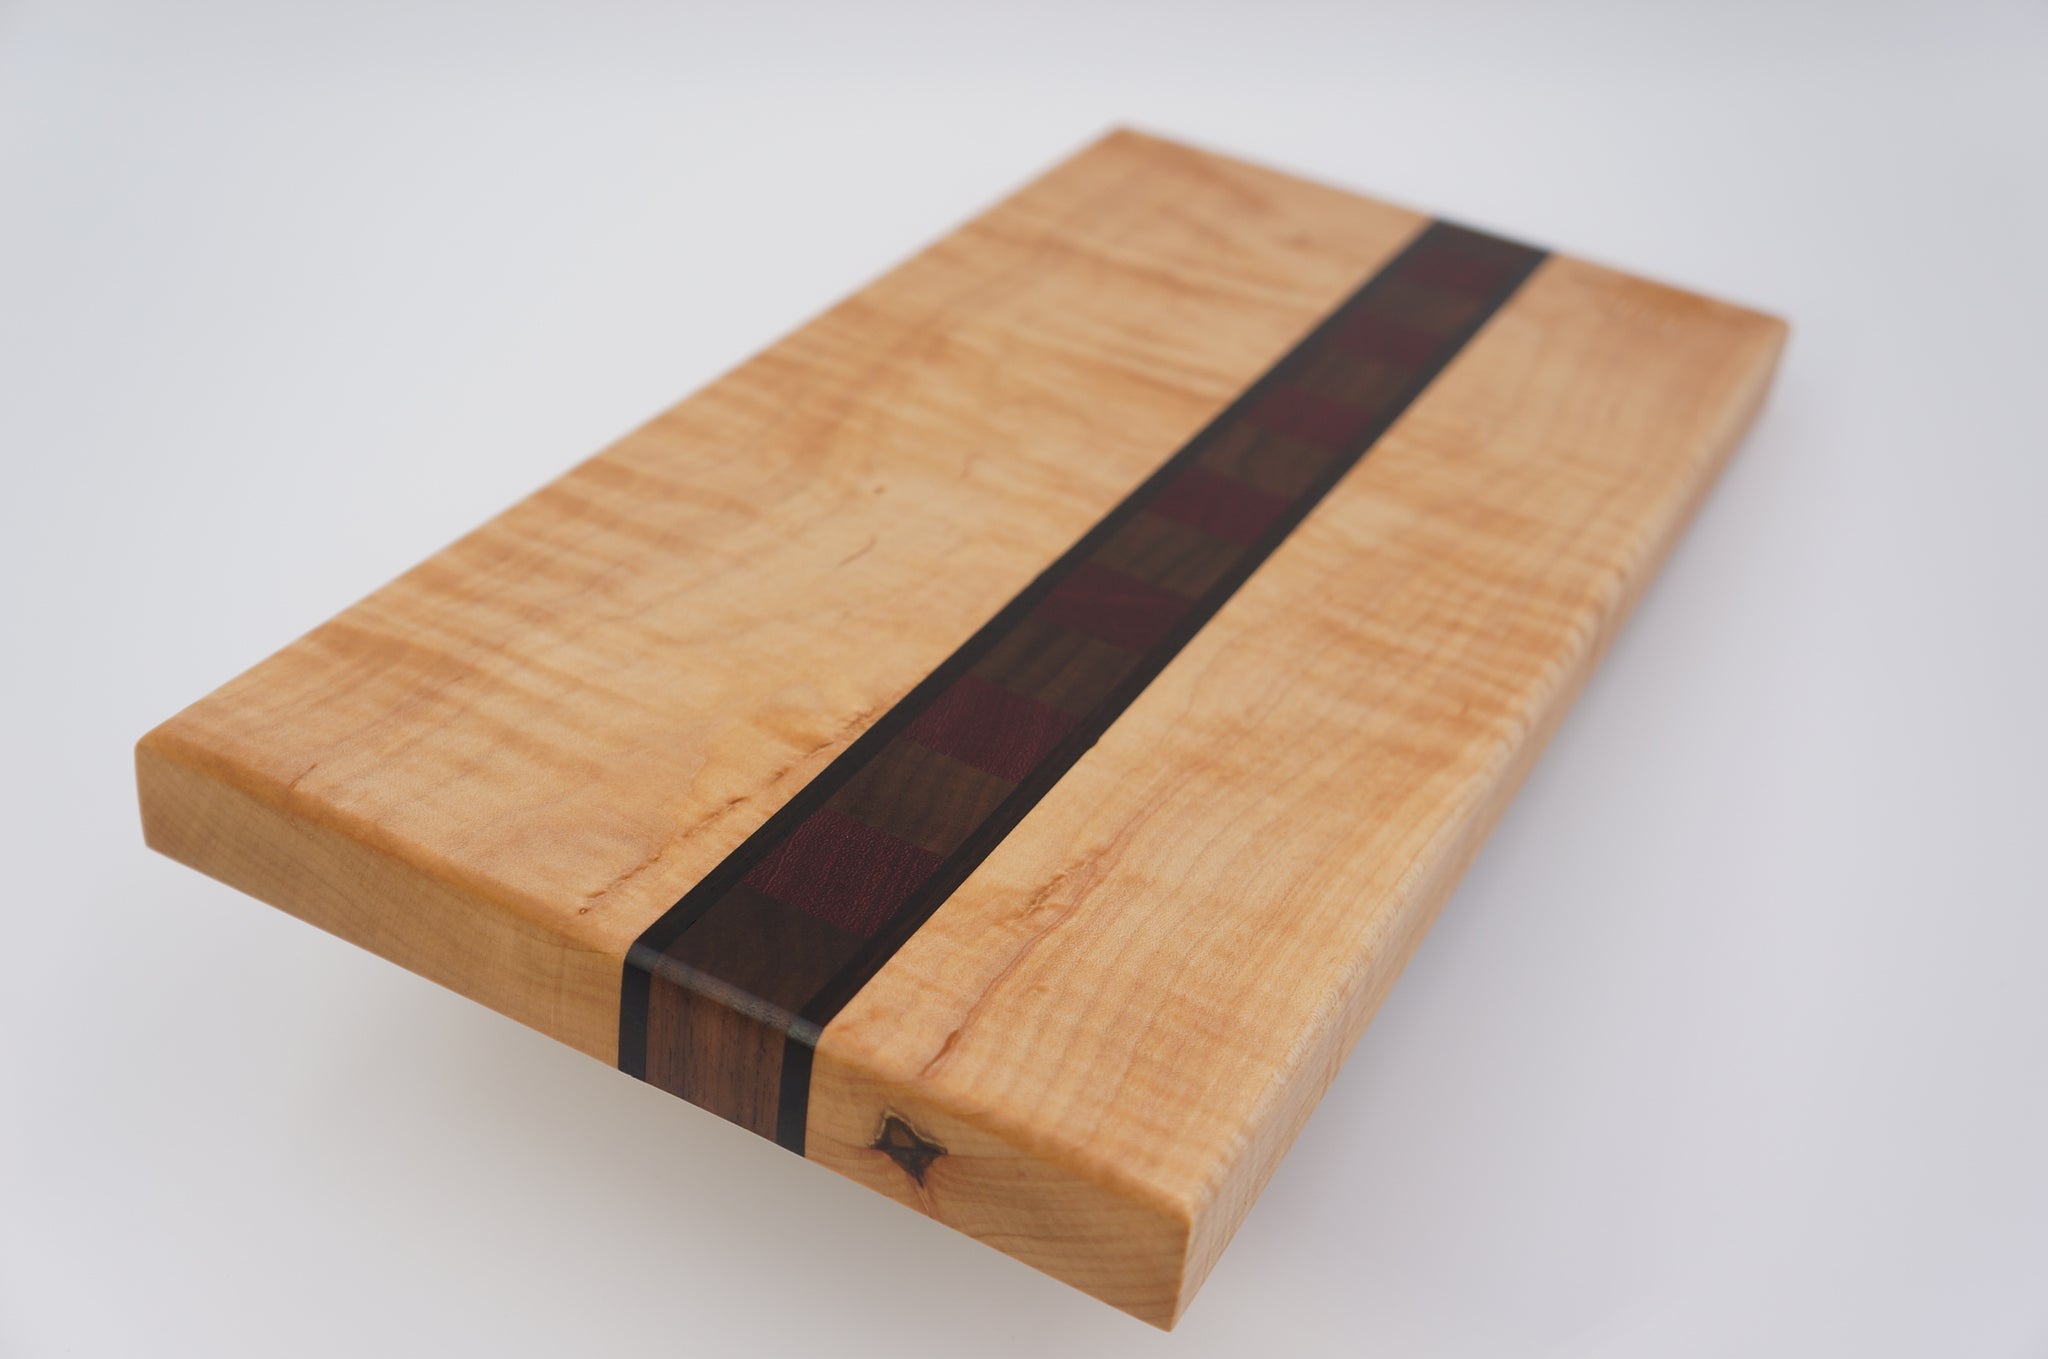 Maple Cutting Board